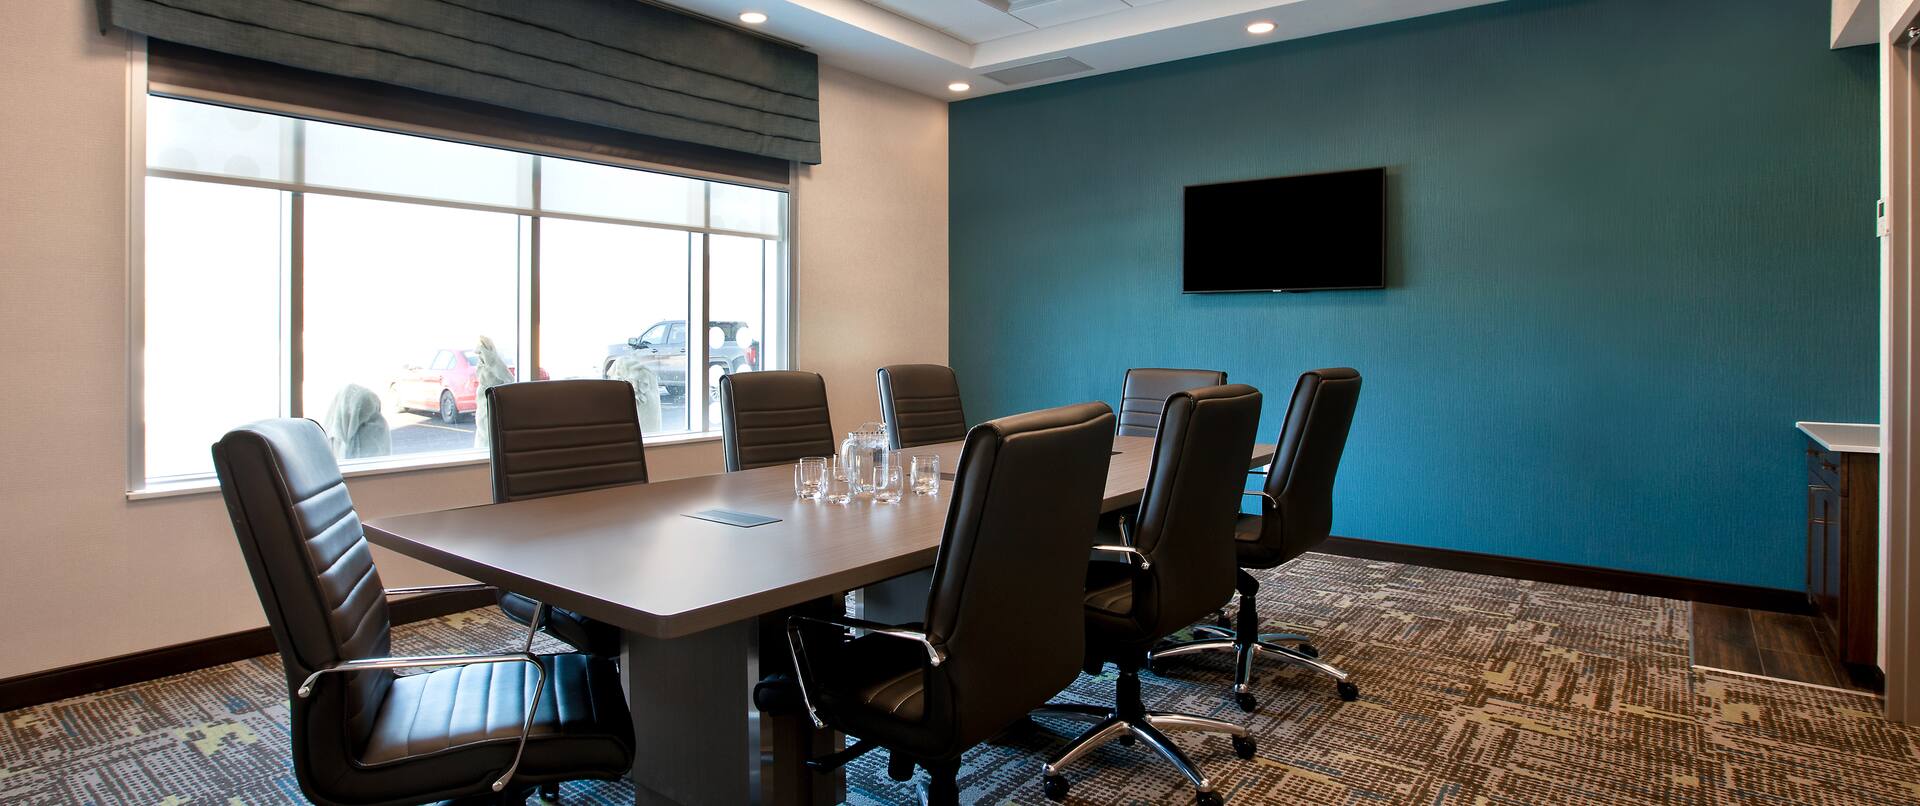 boardroom style meeting space